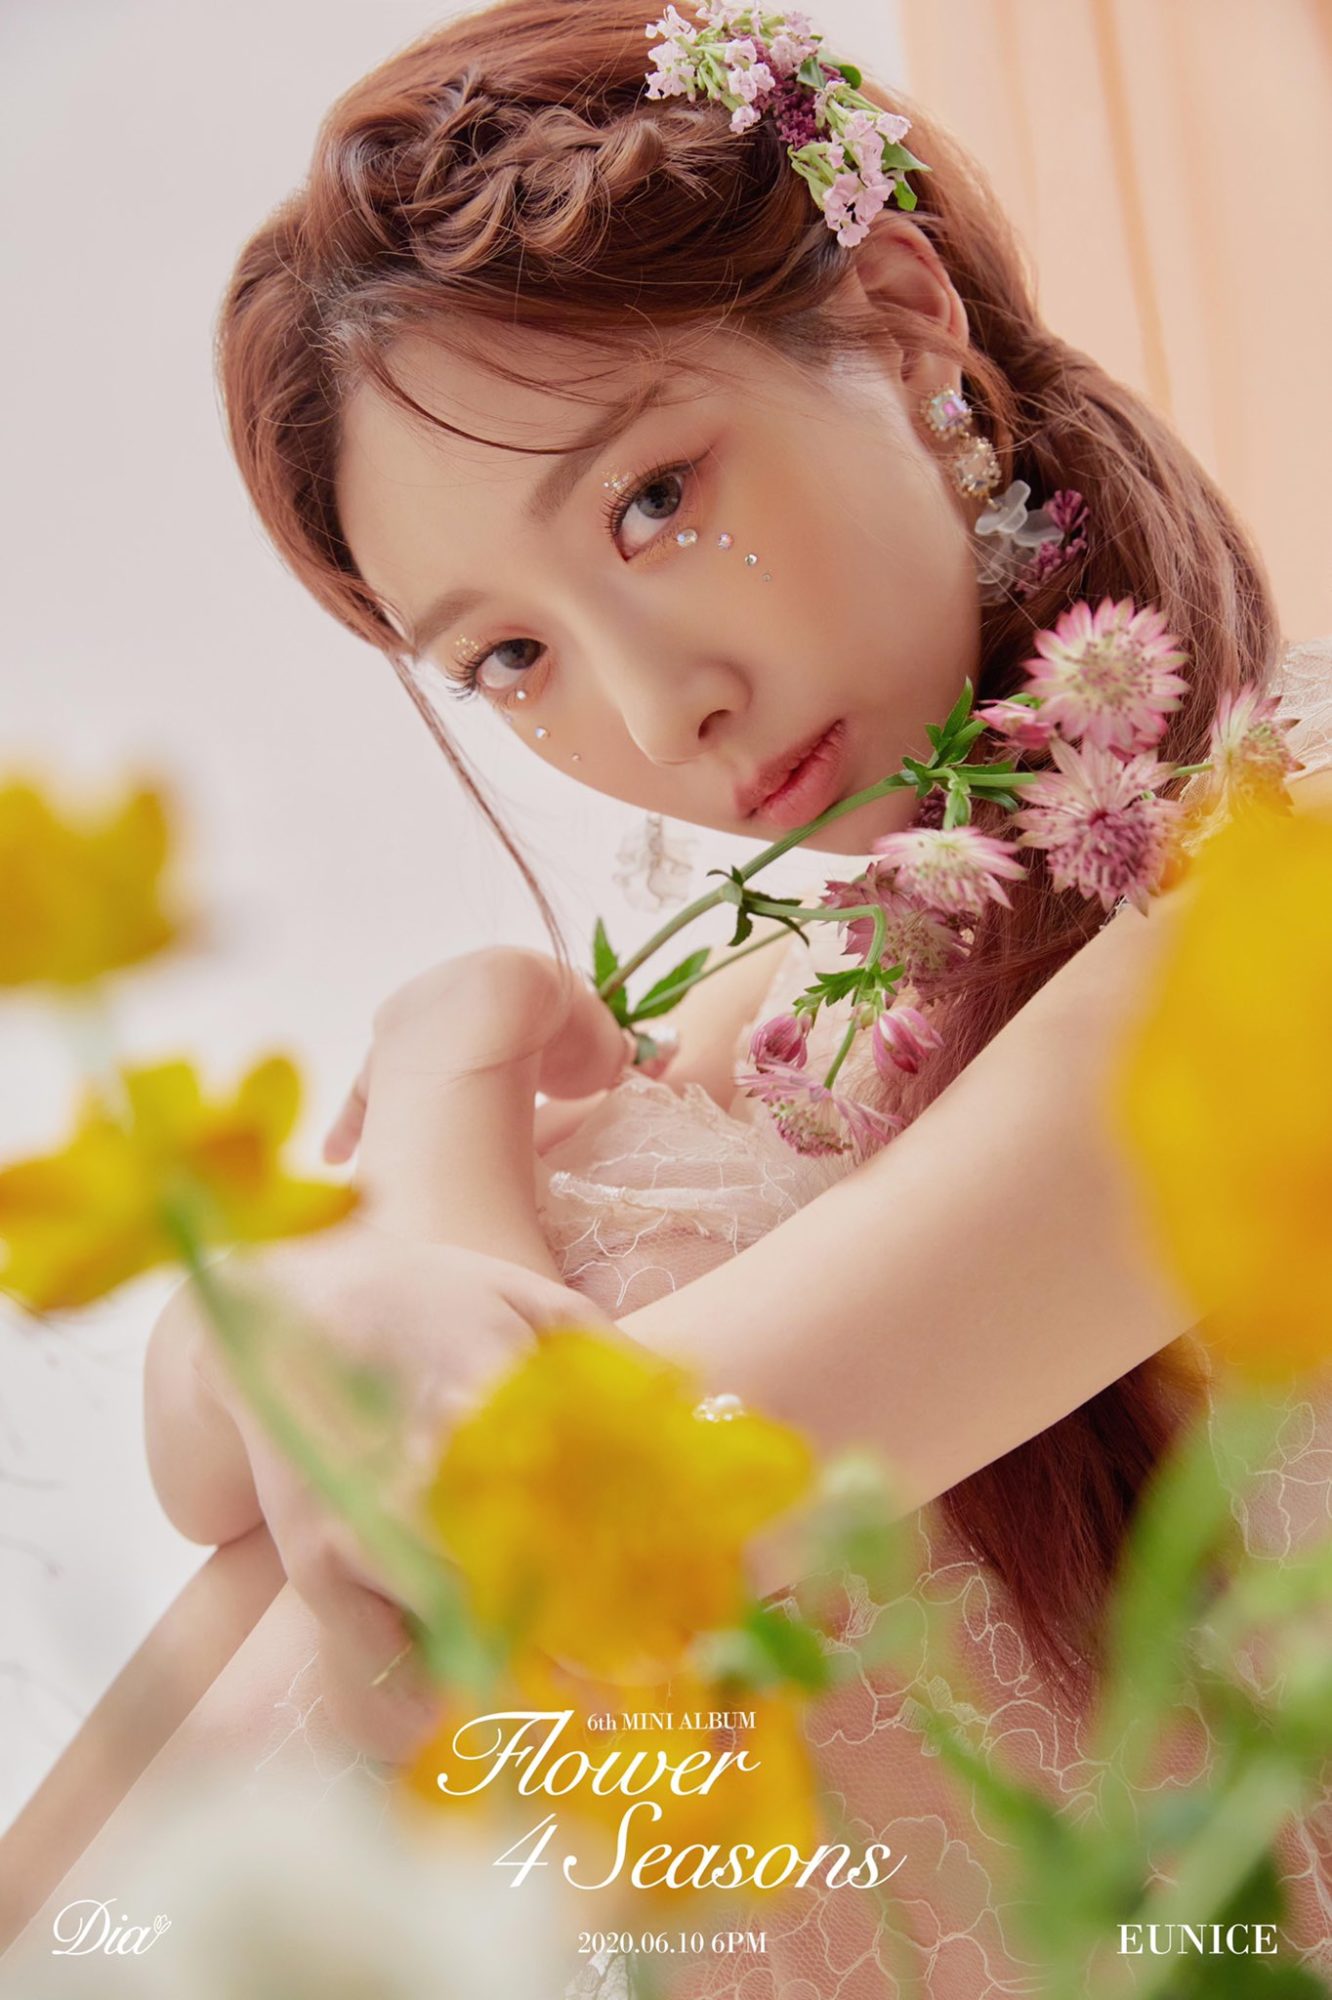 DIA Flower 4 Seasons Eunice Teaser